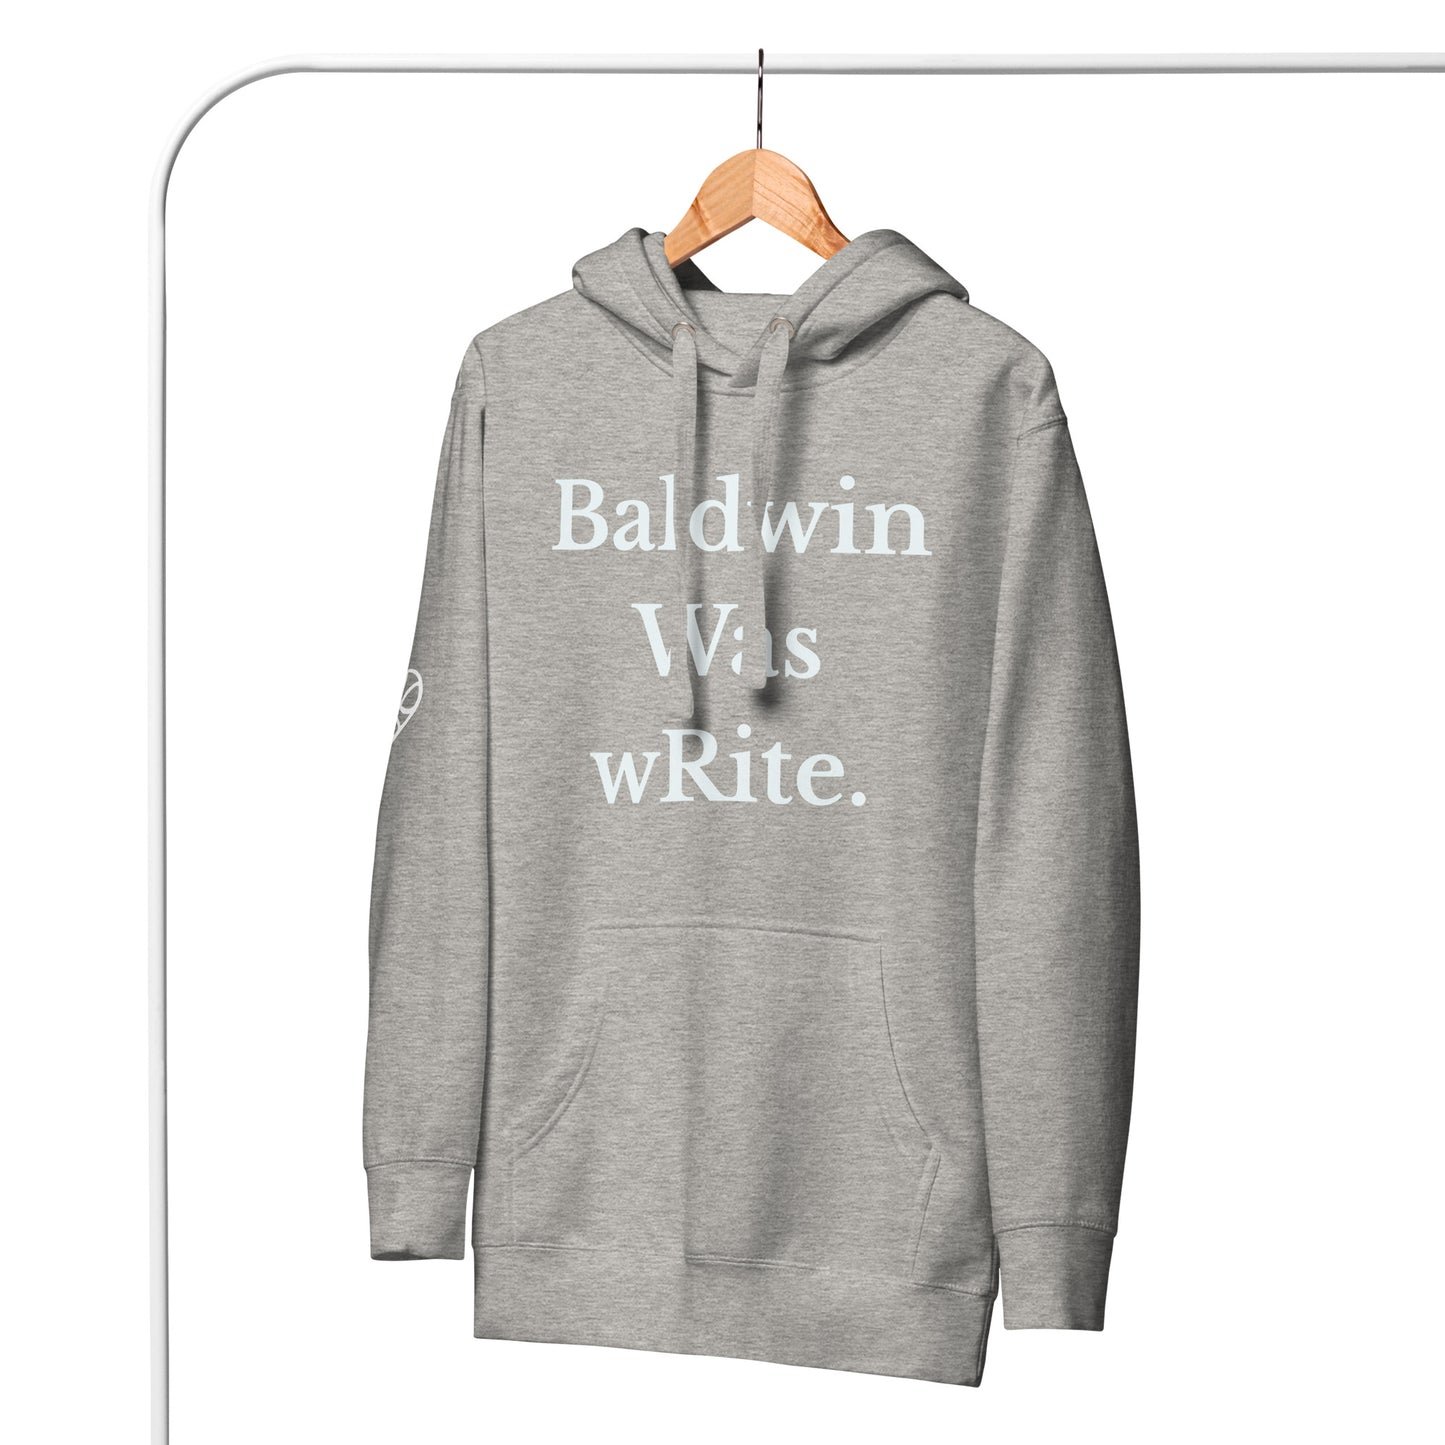 Baldwin was wRite